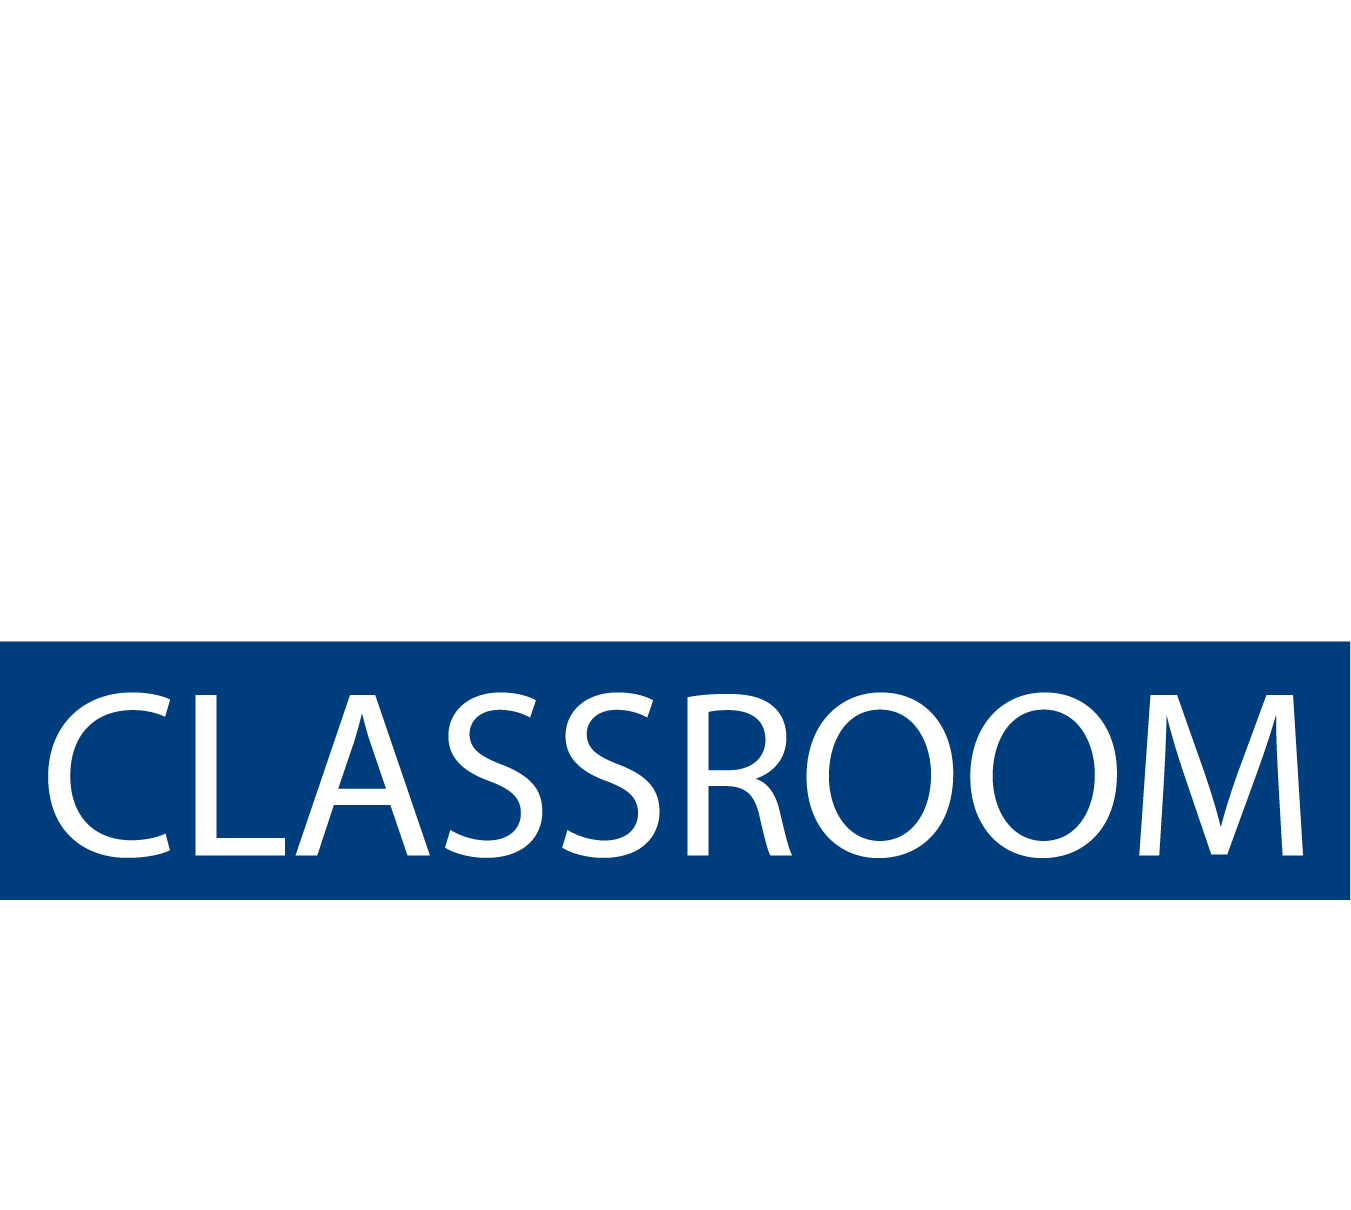 Why use classroom audio?